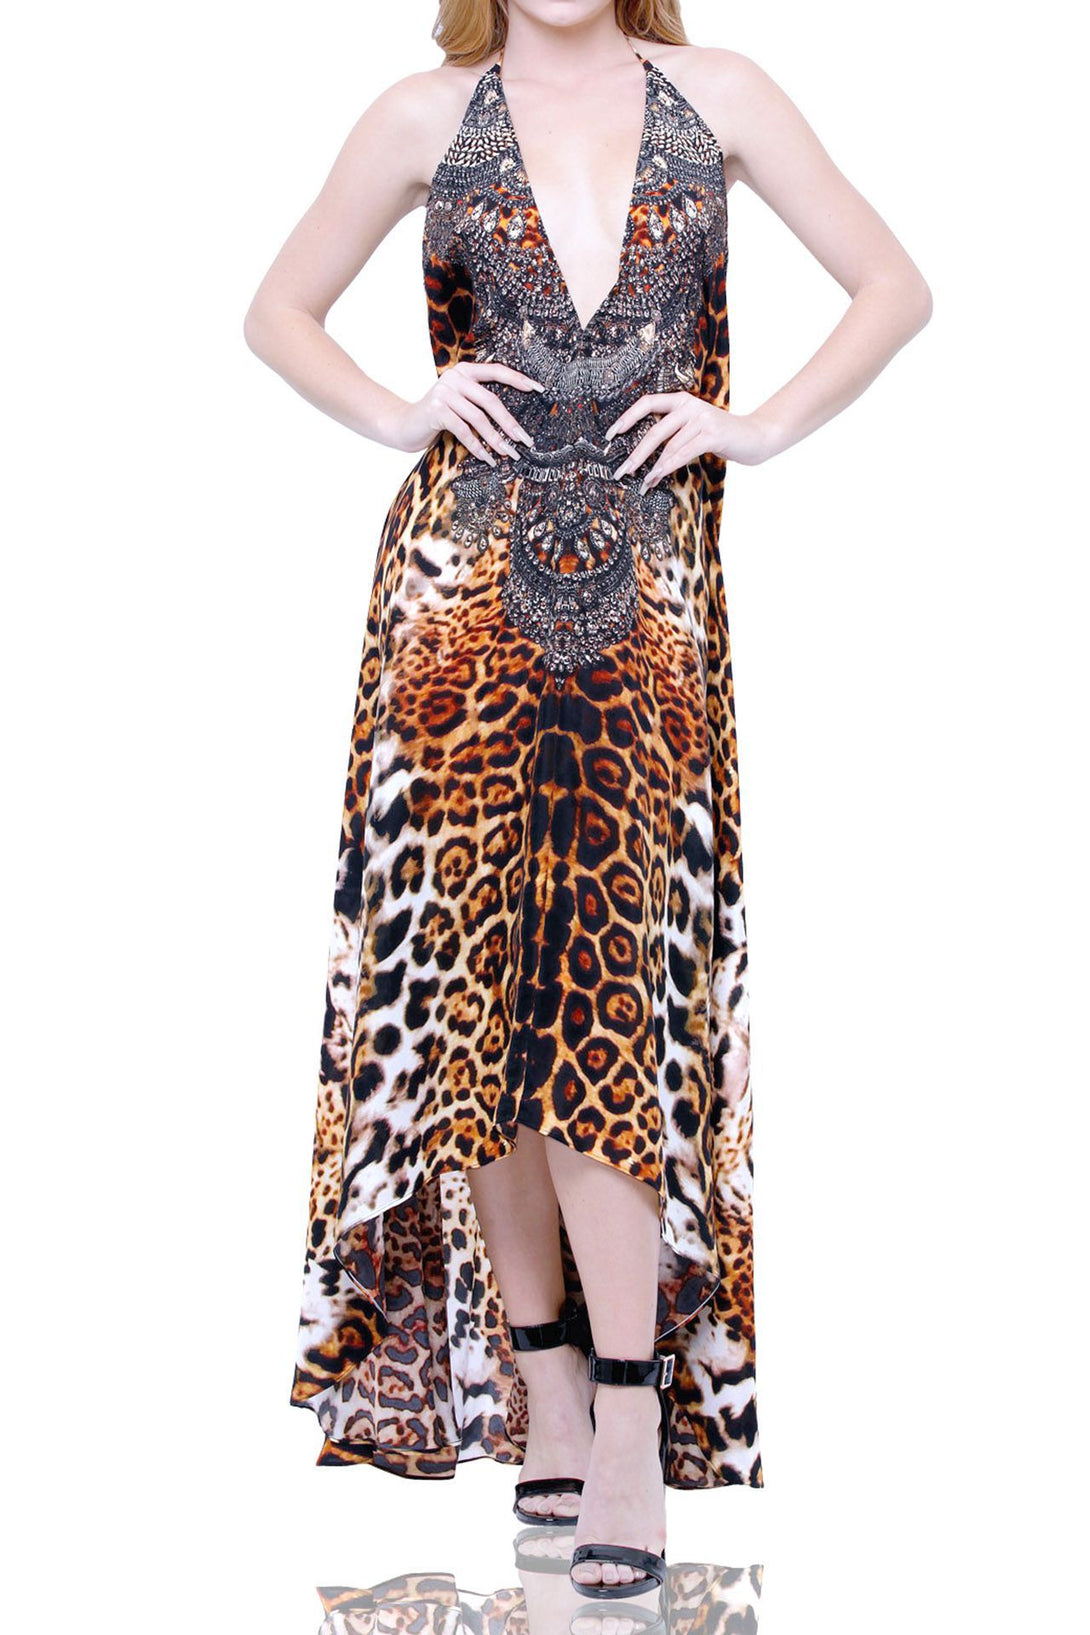 "Shahida Parides" "animal print long dress" "animal print dress maxi" "maxi cheetah dress"